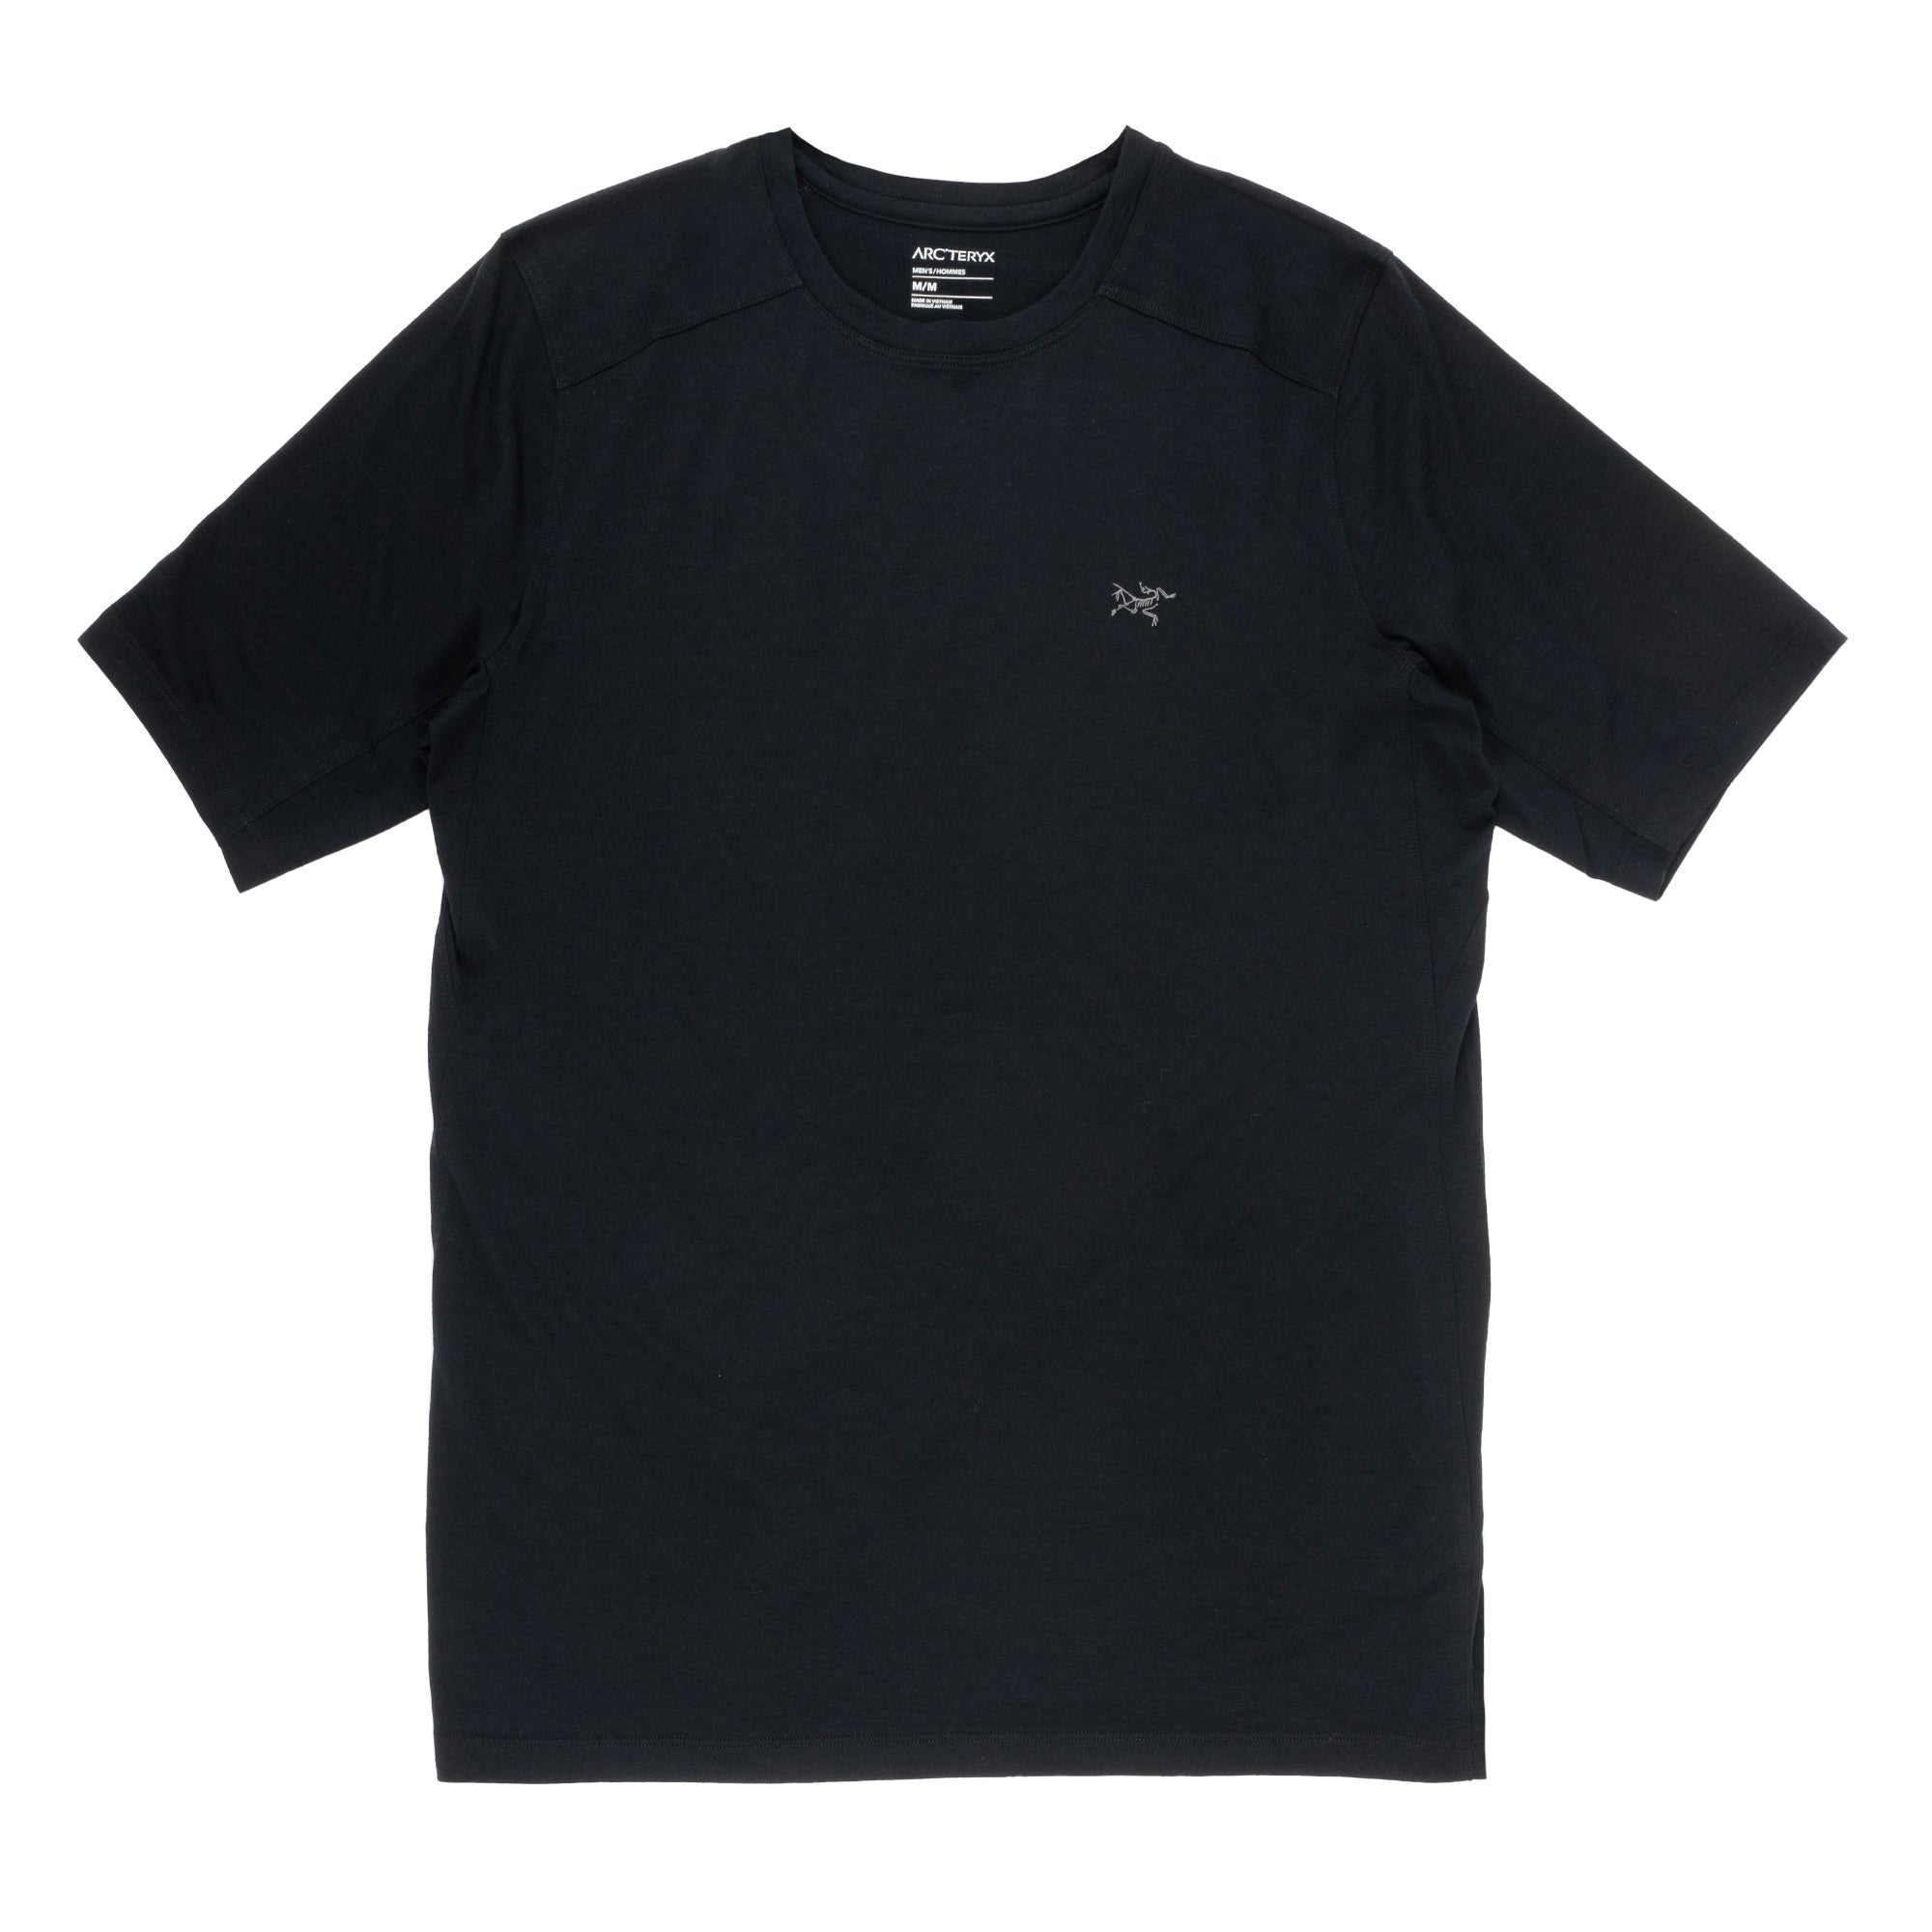 Ionia Wool Shirt SS X000006816 Black